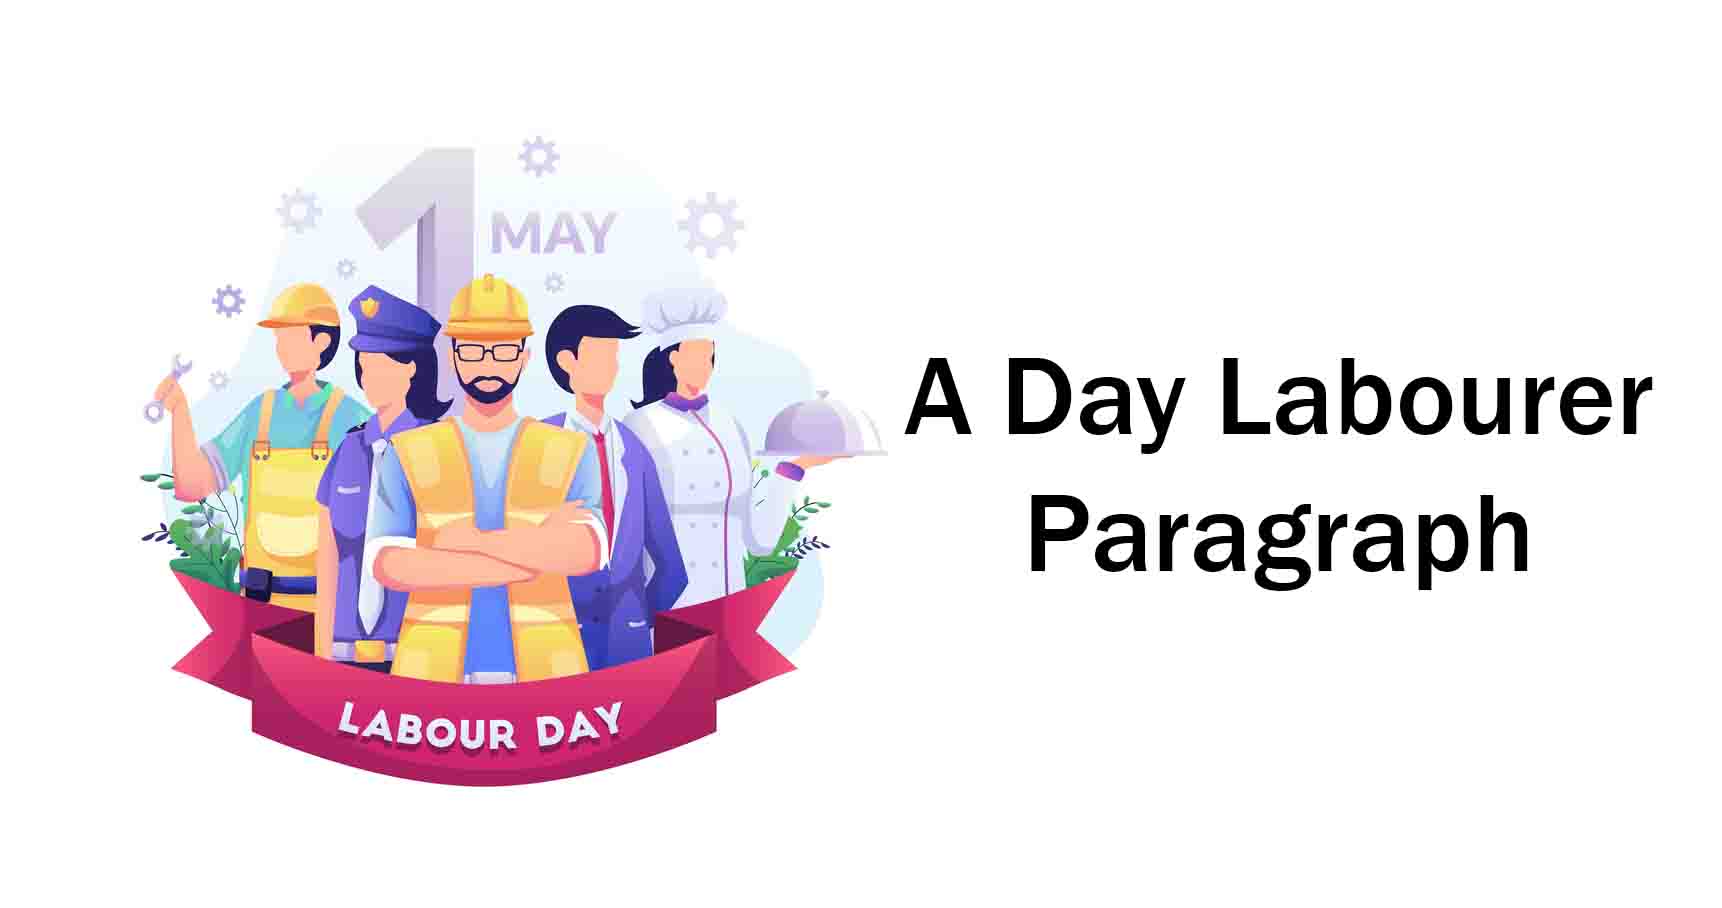 a day labourer paragraph